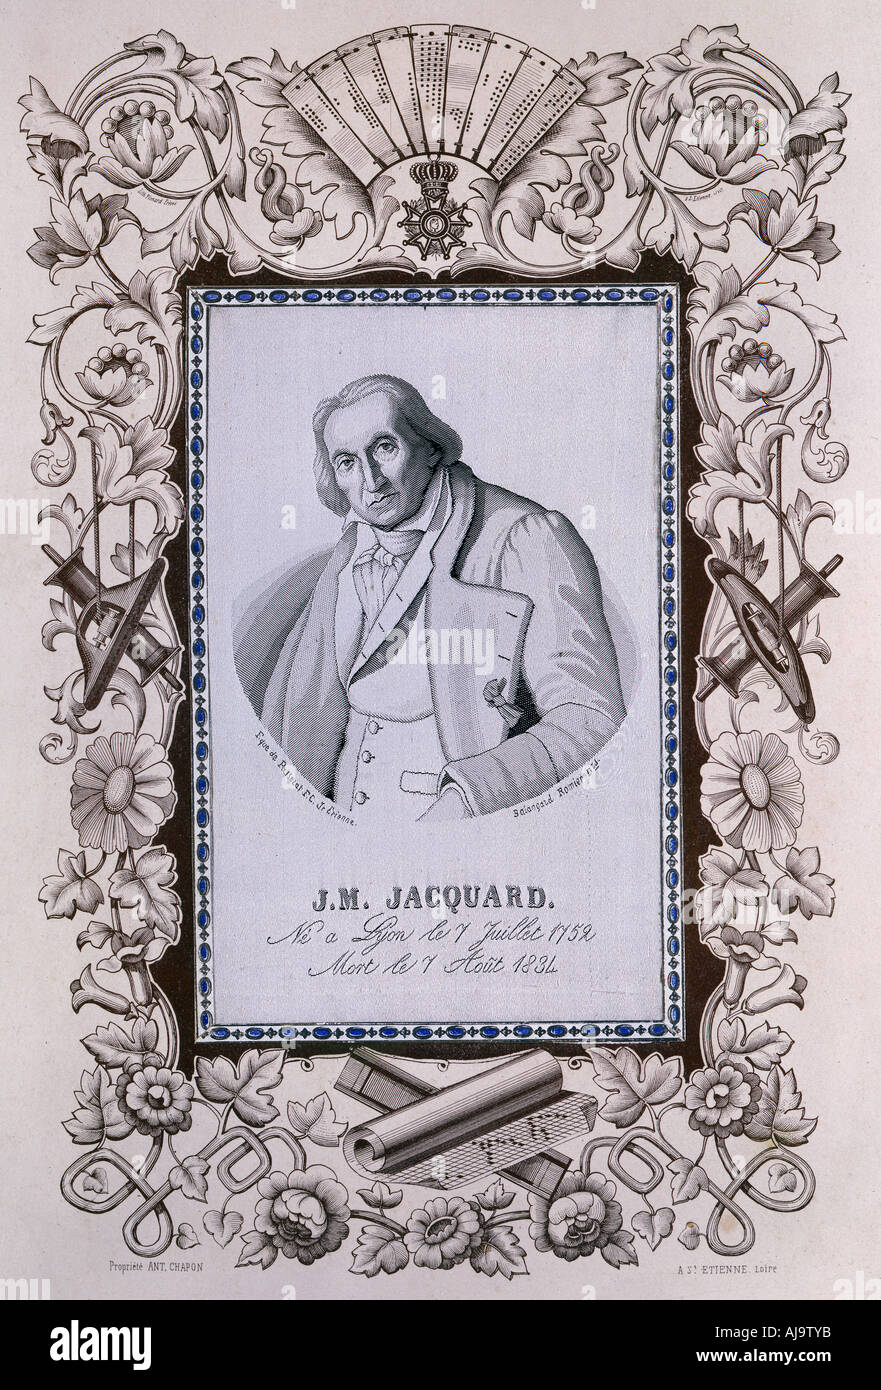 Joseph-Marie Jacquard, inventor of the Jacquard loom, c1850. Artist: Unknown Stock Photo